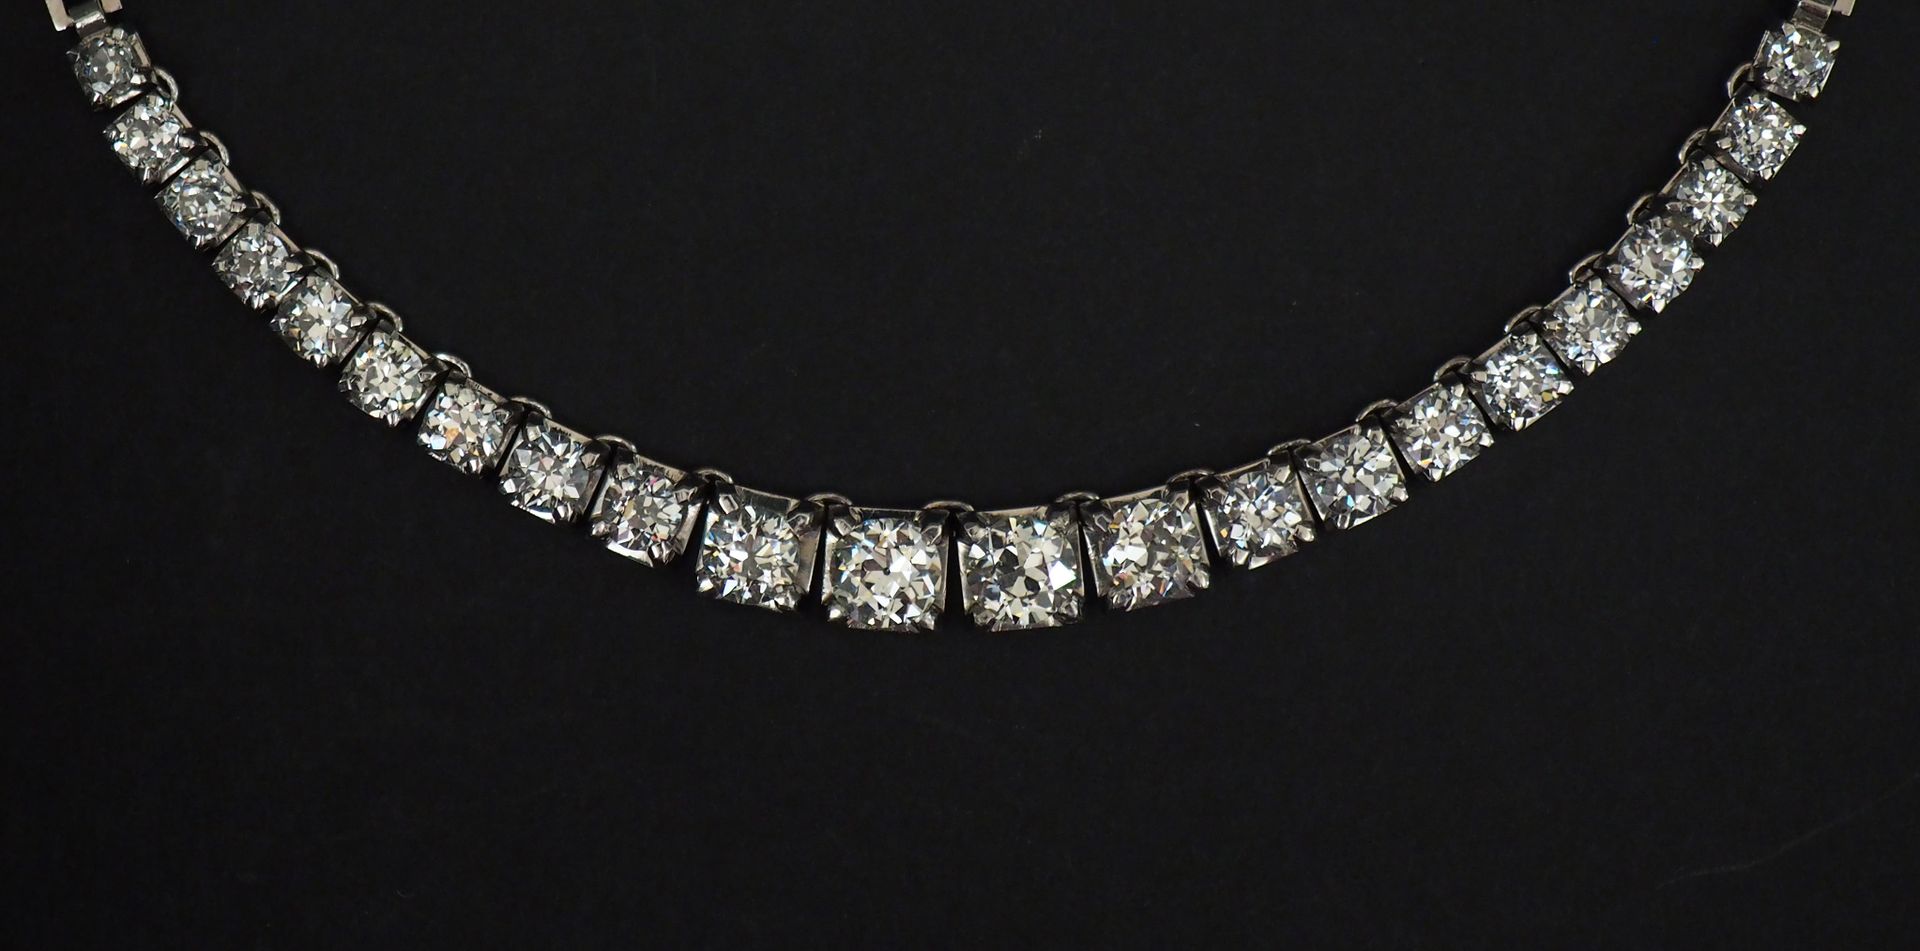 Null 铰链式钻石项链，镶有22颗老式切割钻石。

中间的四颗钻石重量：1.63克拉（J-SI1），1.51克拉（J-SI2），1.12克拉（K-VS2）和1&hellip;